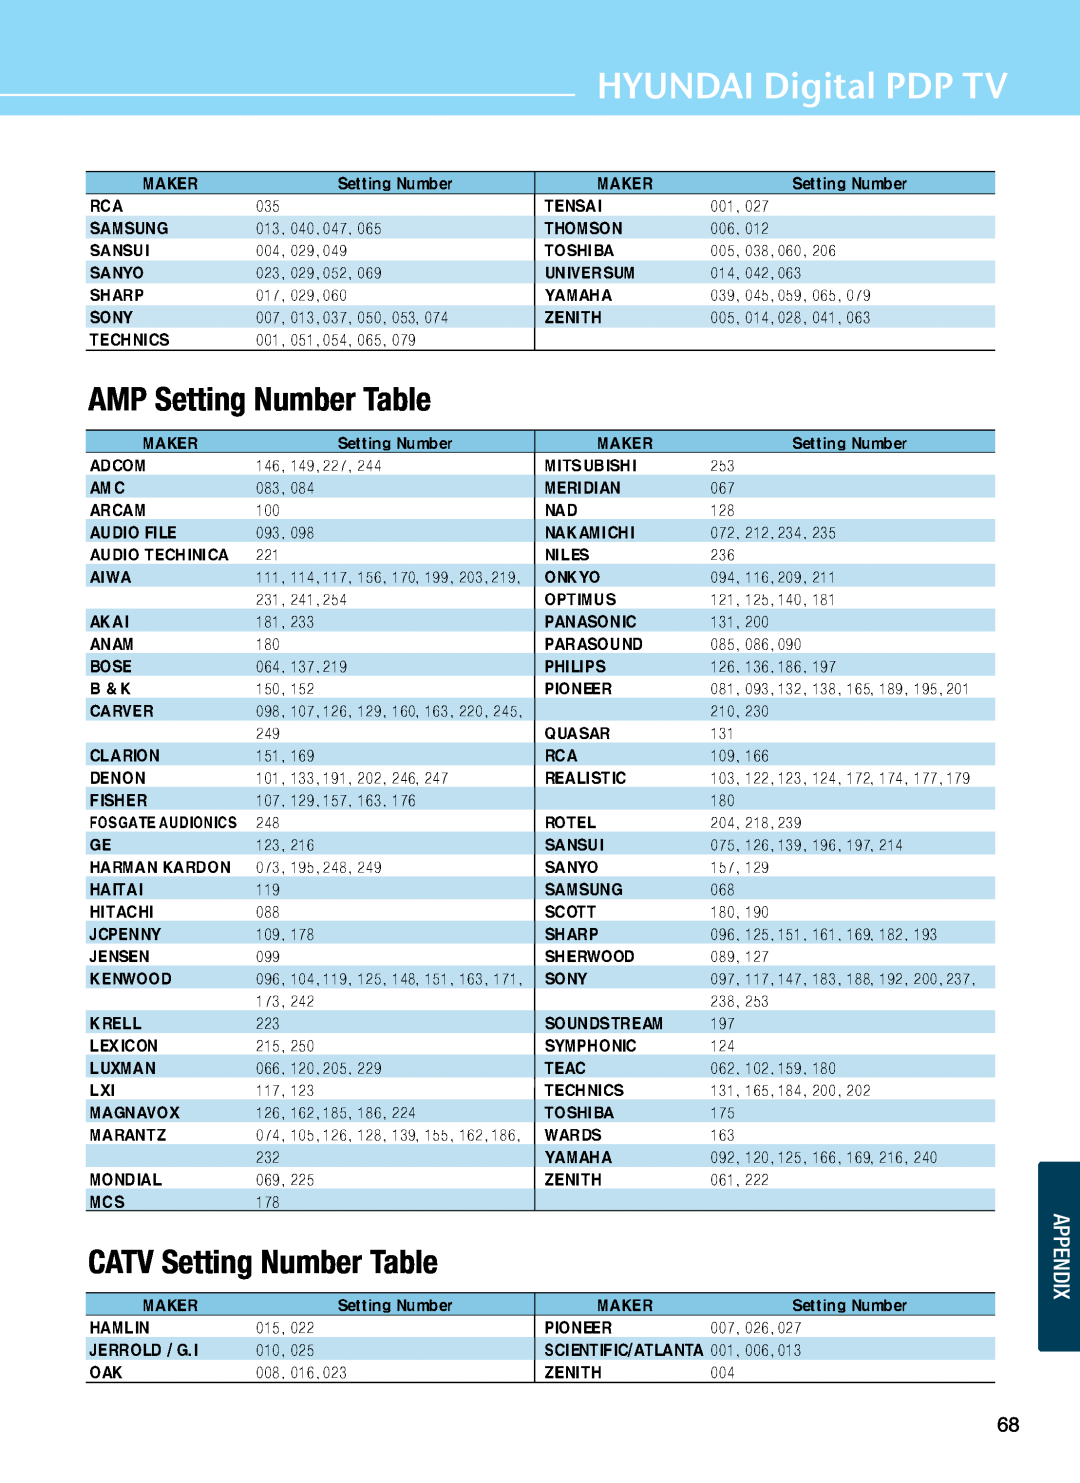 Hyundai Q501, Q421S, Q421H manual AMP Setting Number Table, CATV Setting Number Table, HYUNDAI Digital PDP TV, Appendix 